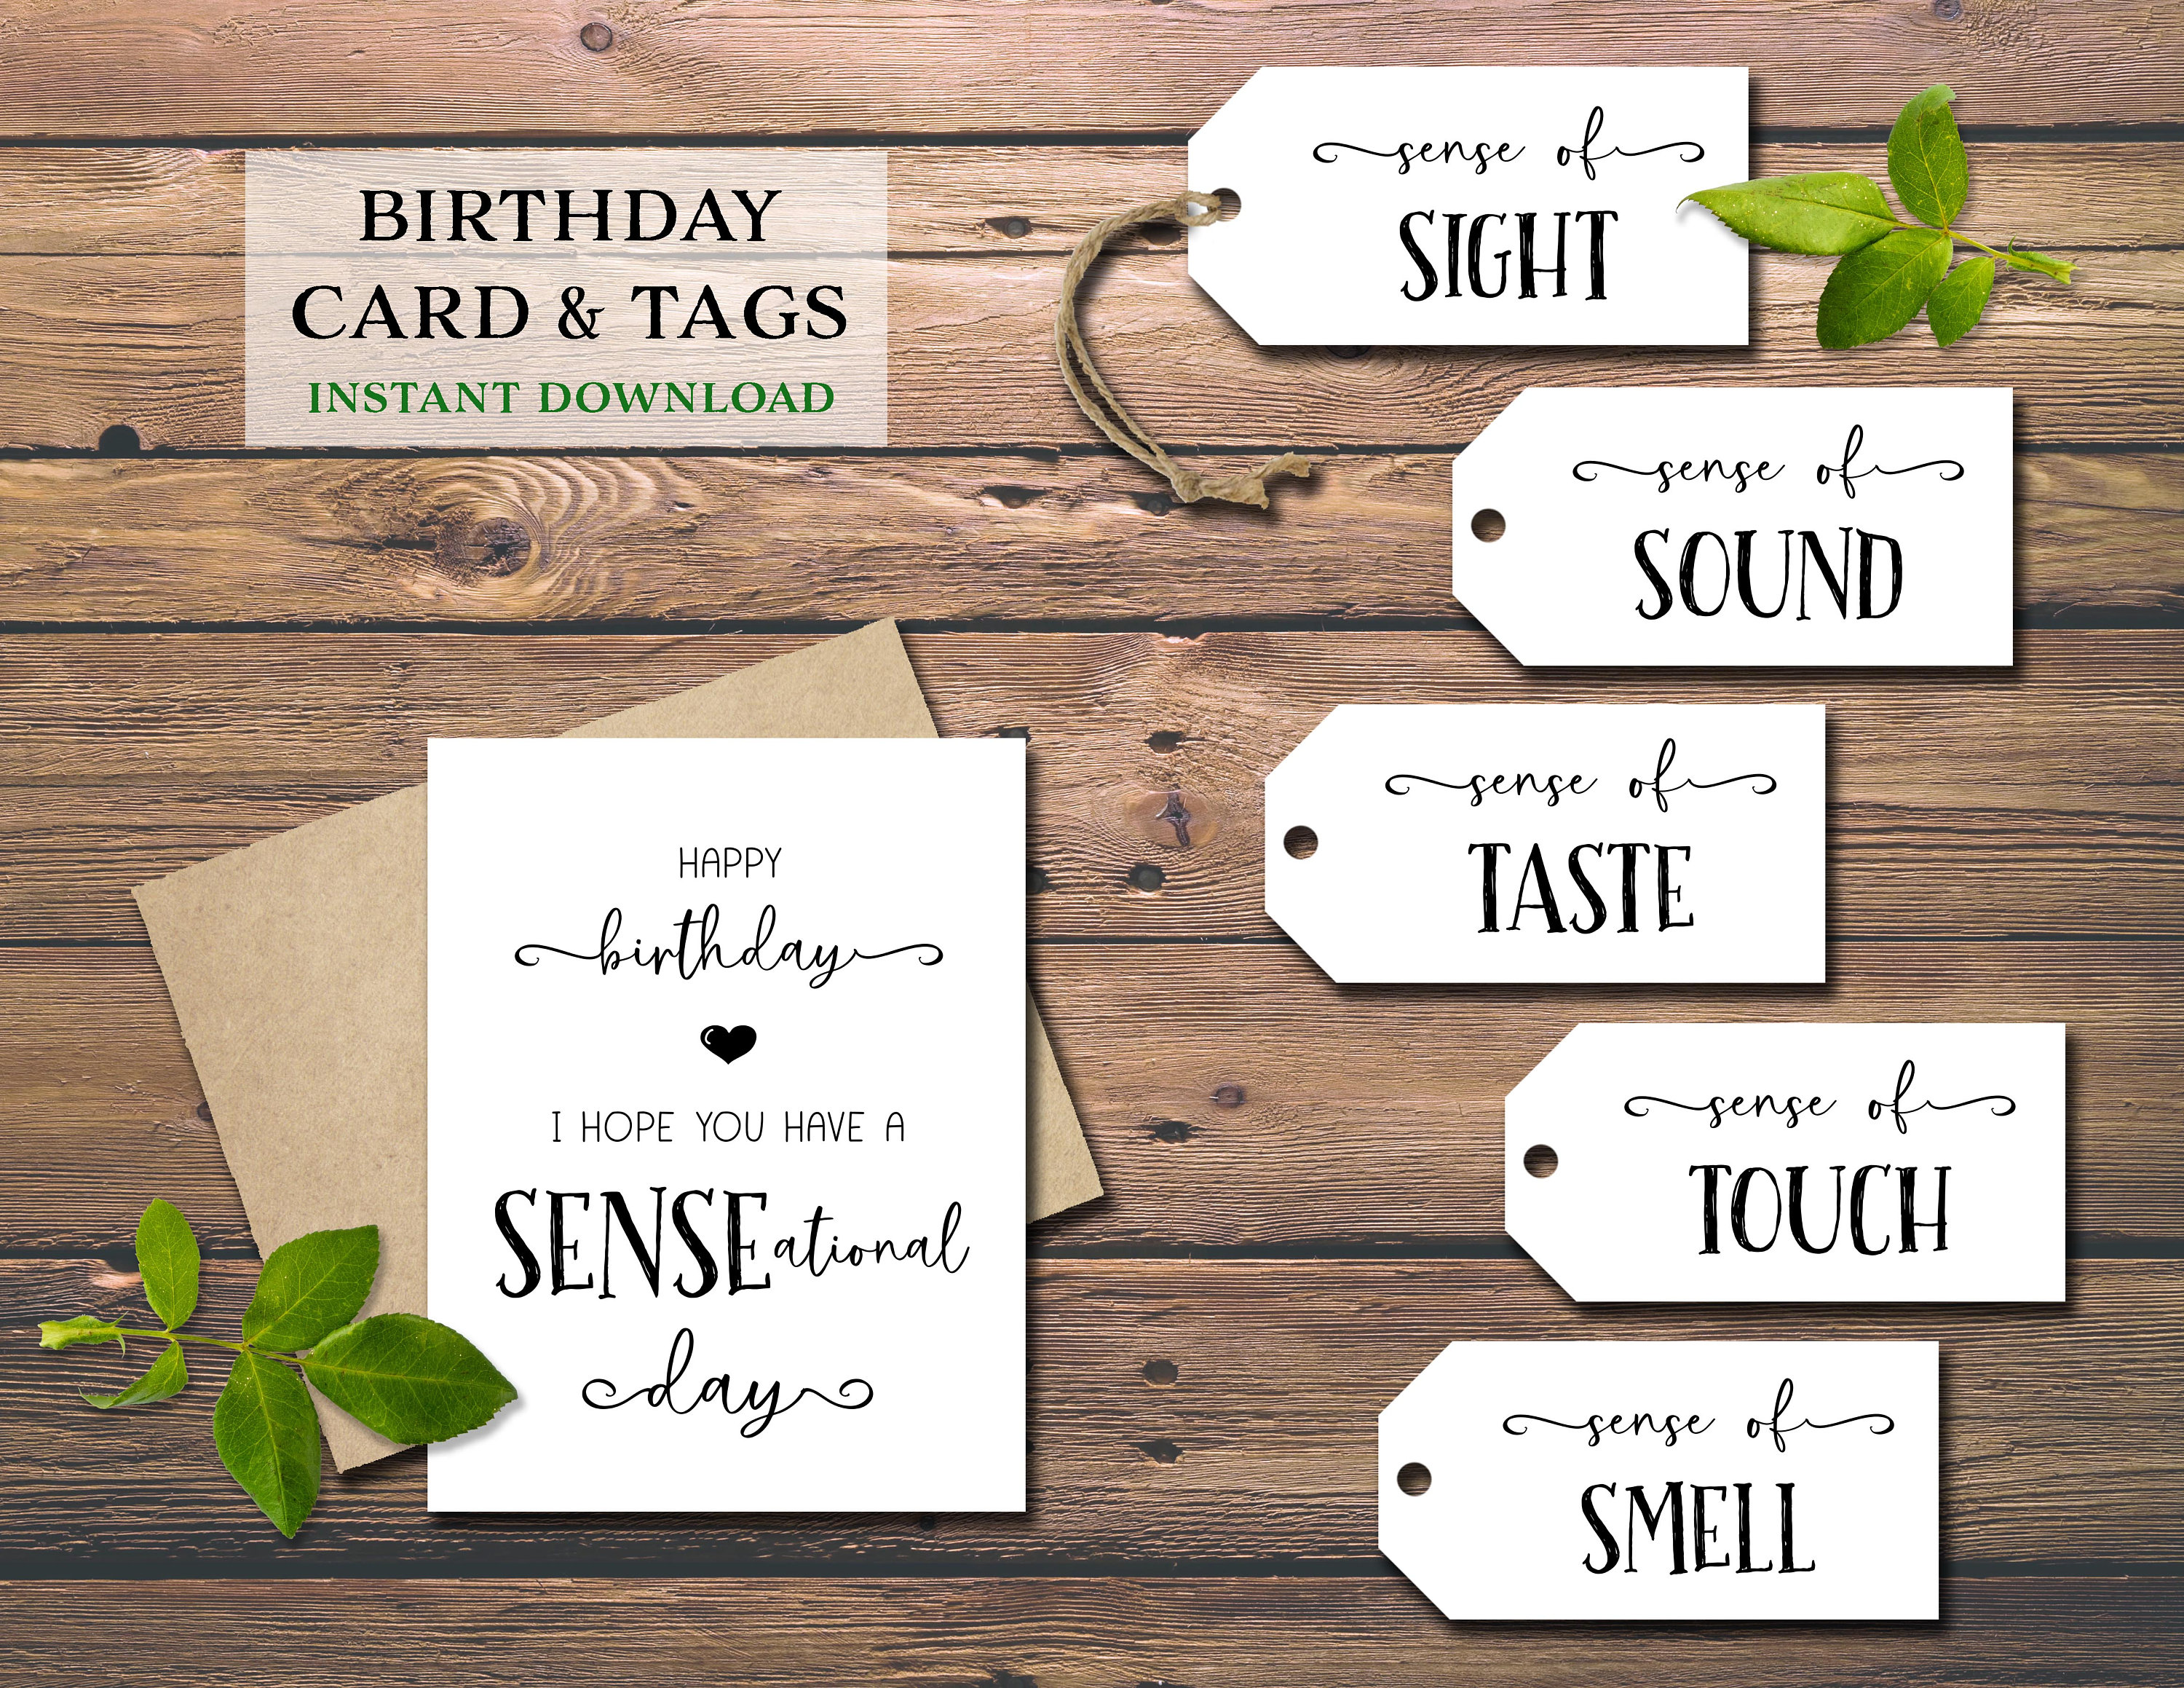 birthday-5-senses-gift-tags-card-five-senses-instant-etsy